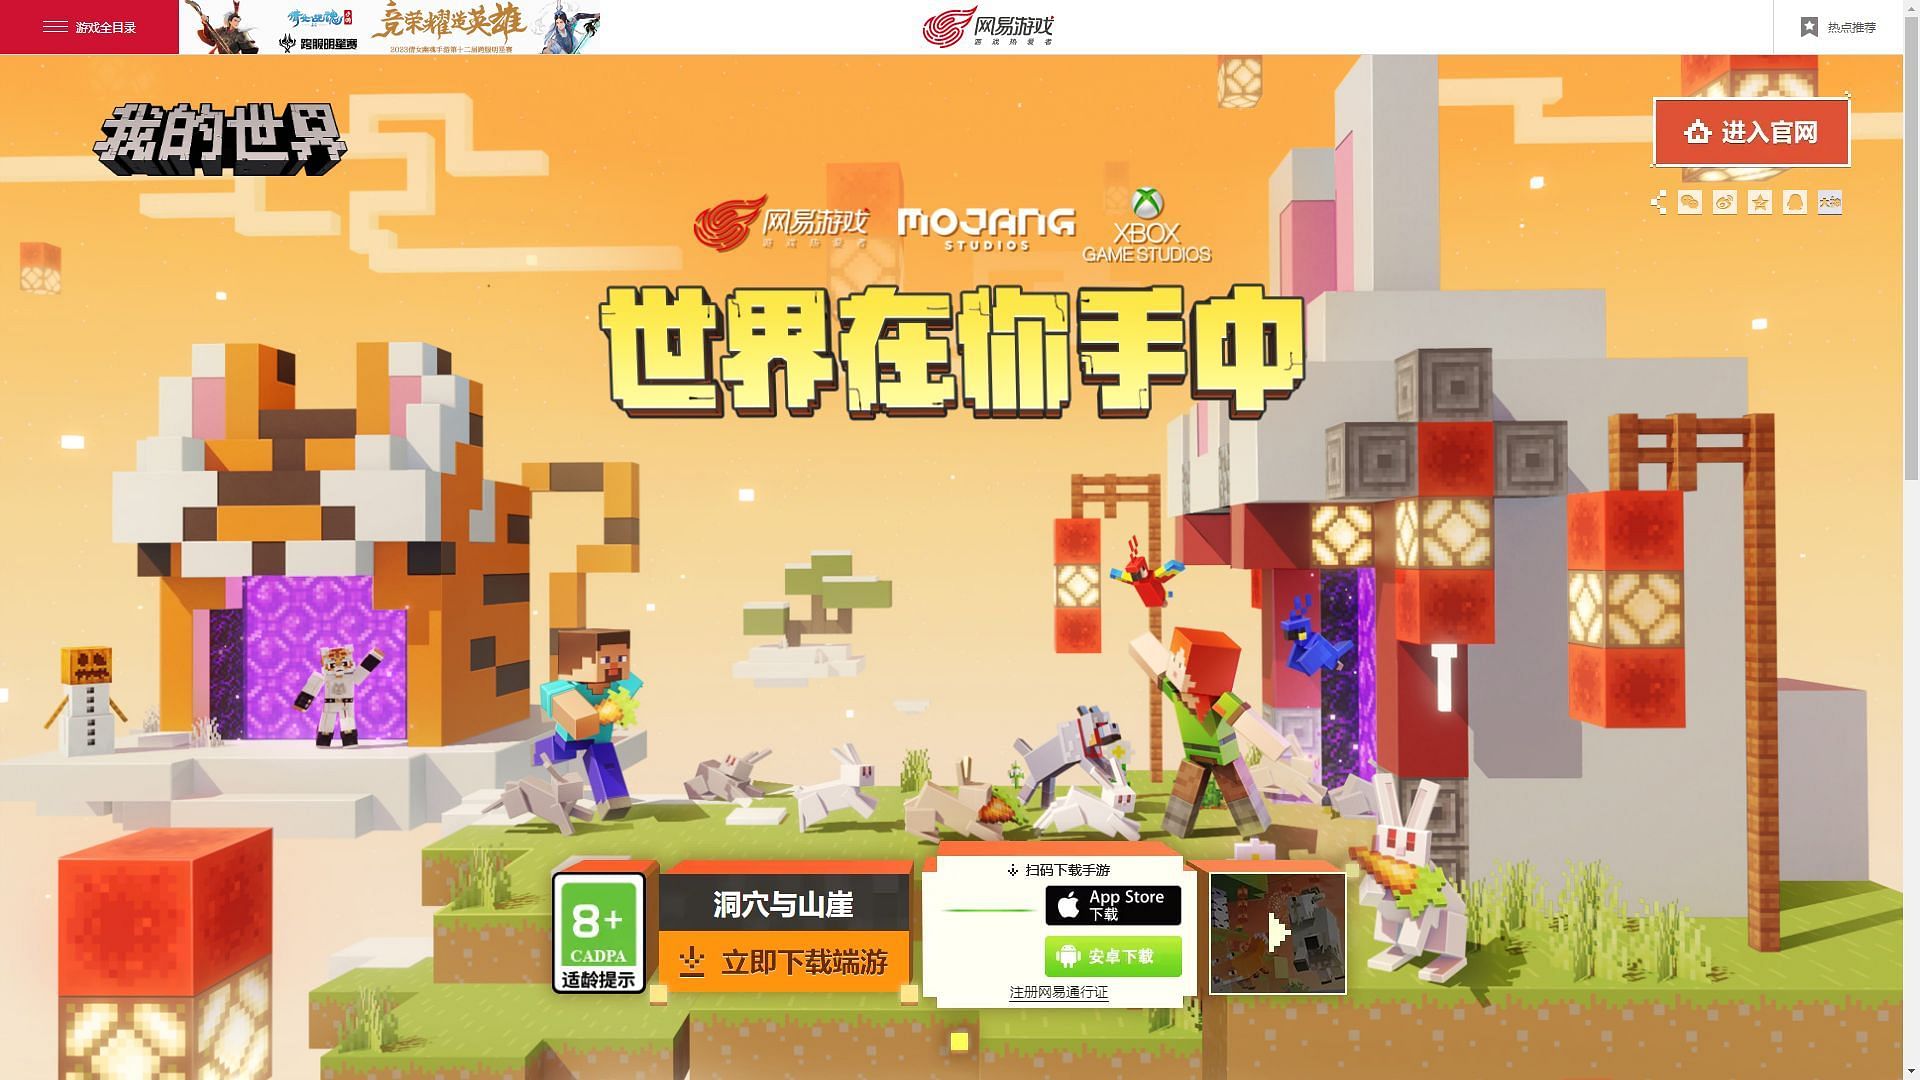 Minecraft China Edition main page on the Netease website (Image via Sportskeeda)